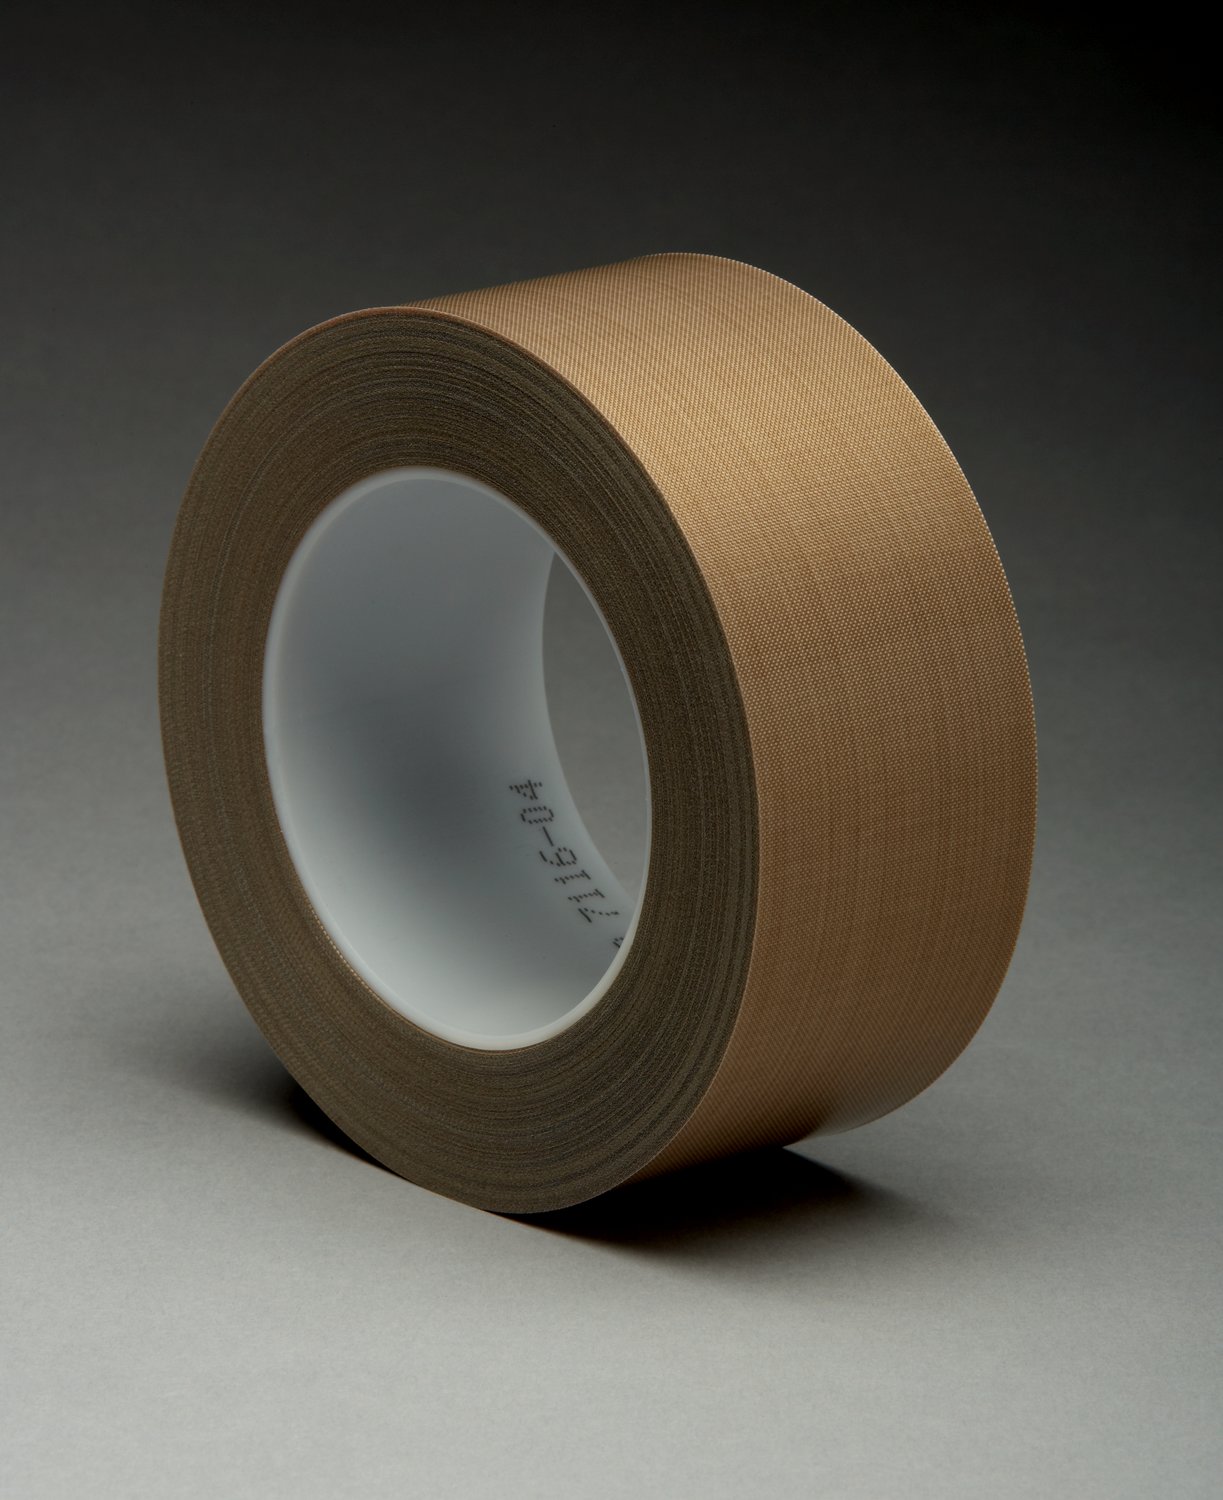 7000050130 - 3M PTFE Glass Cloth Tape 5453, Brown, 3 in x 36 yd, 8.2 mil, 3 rolls
per case